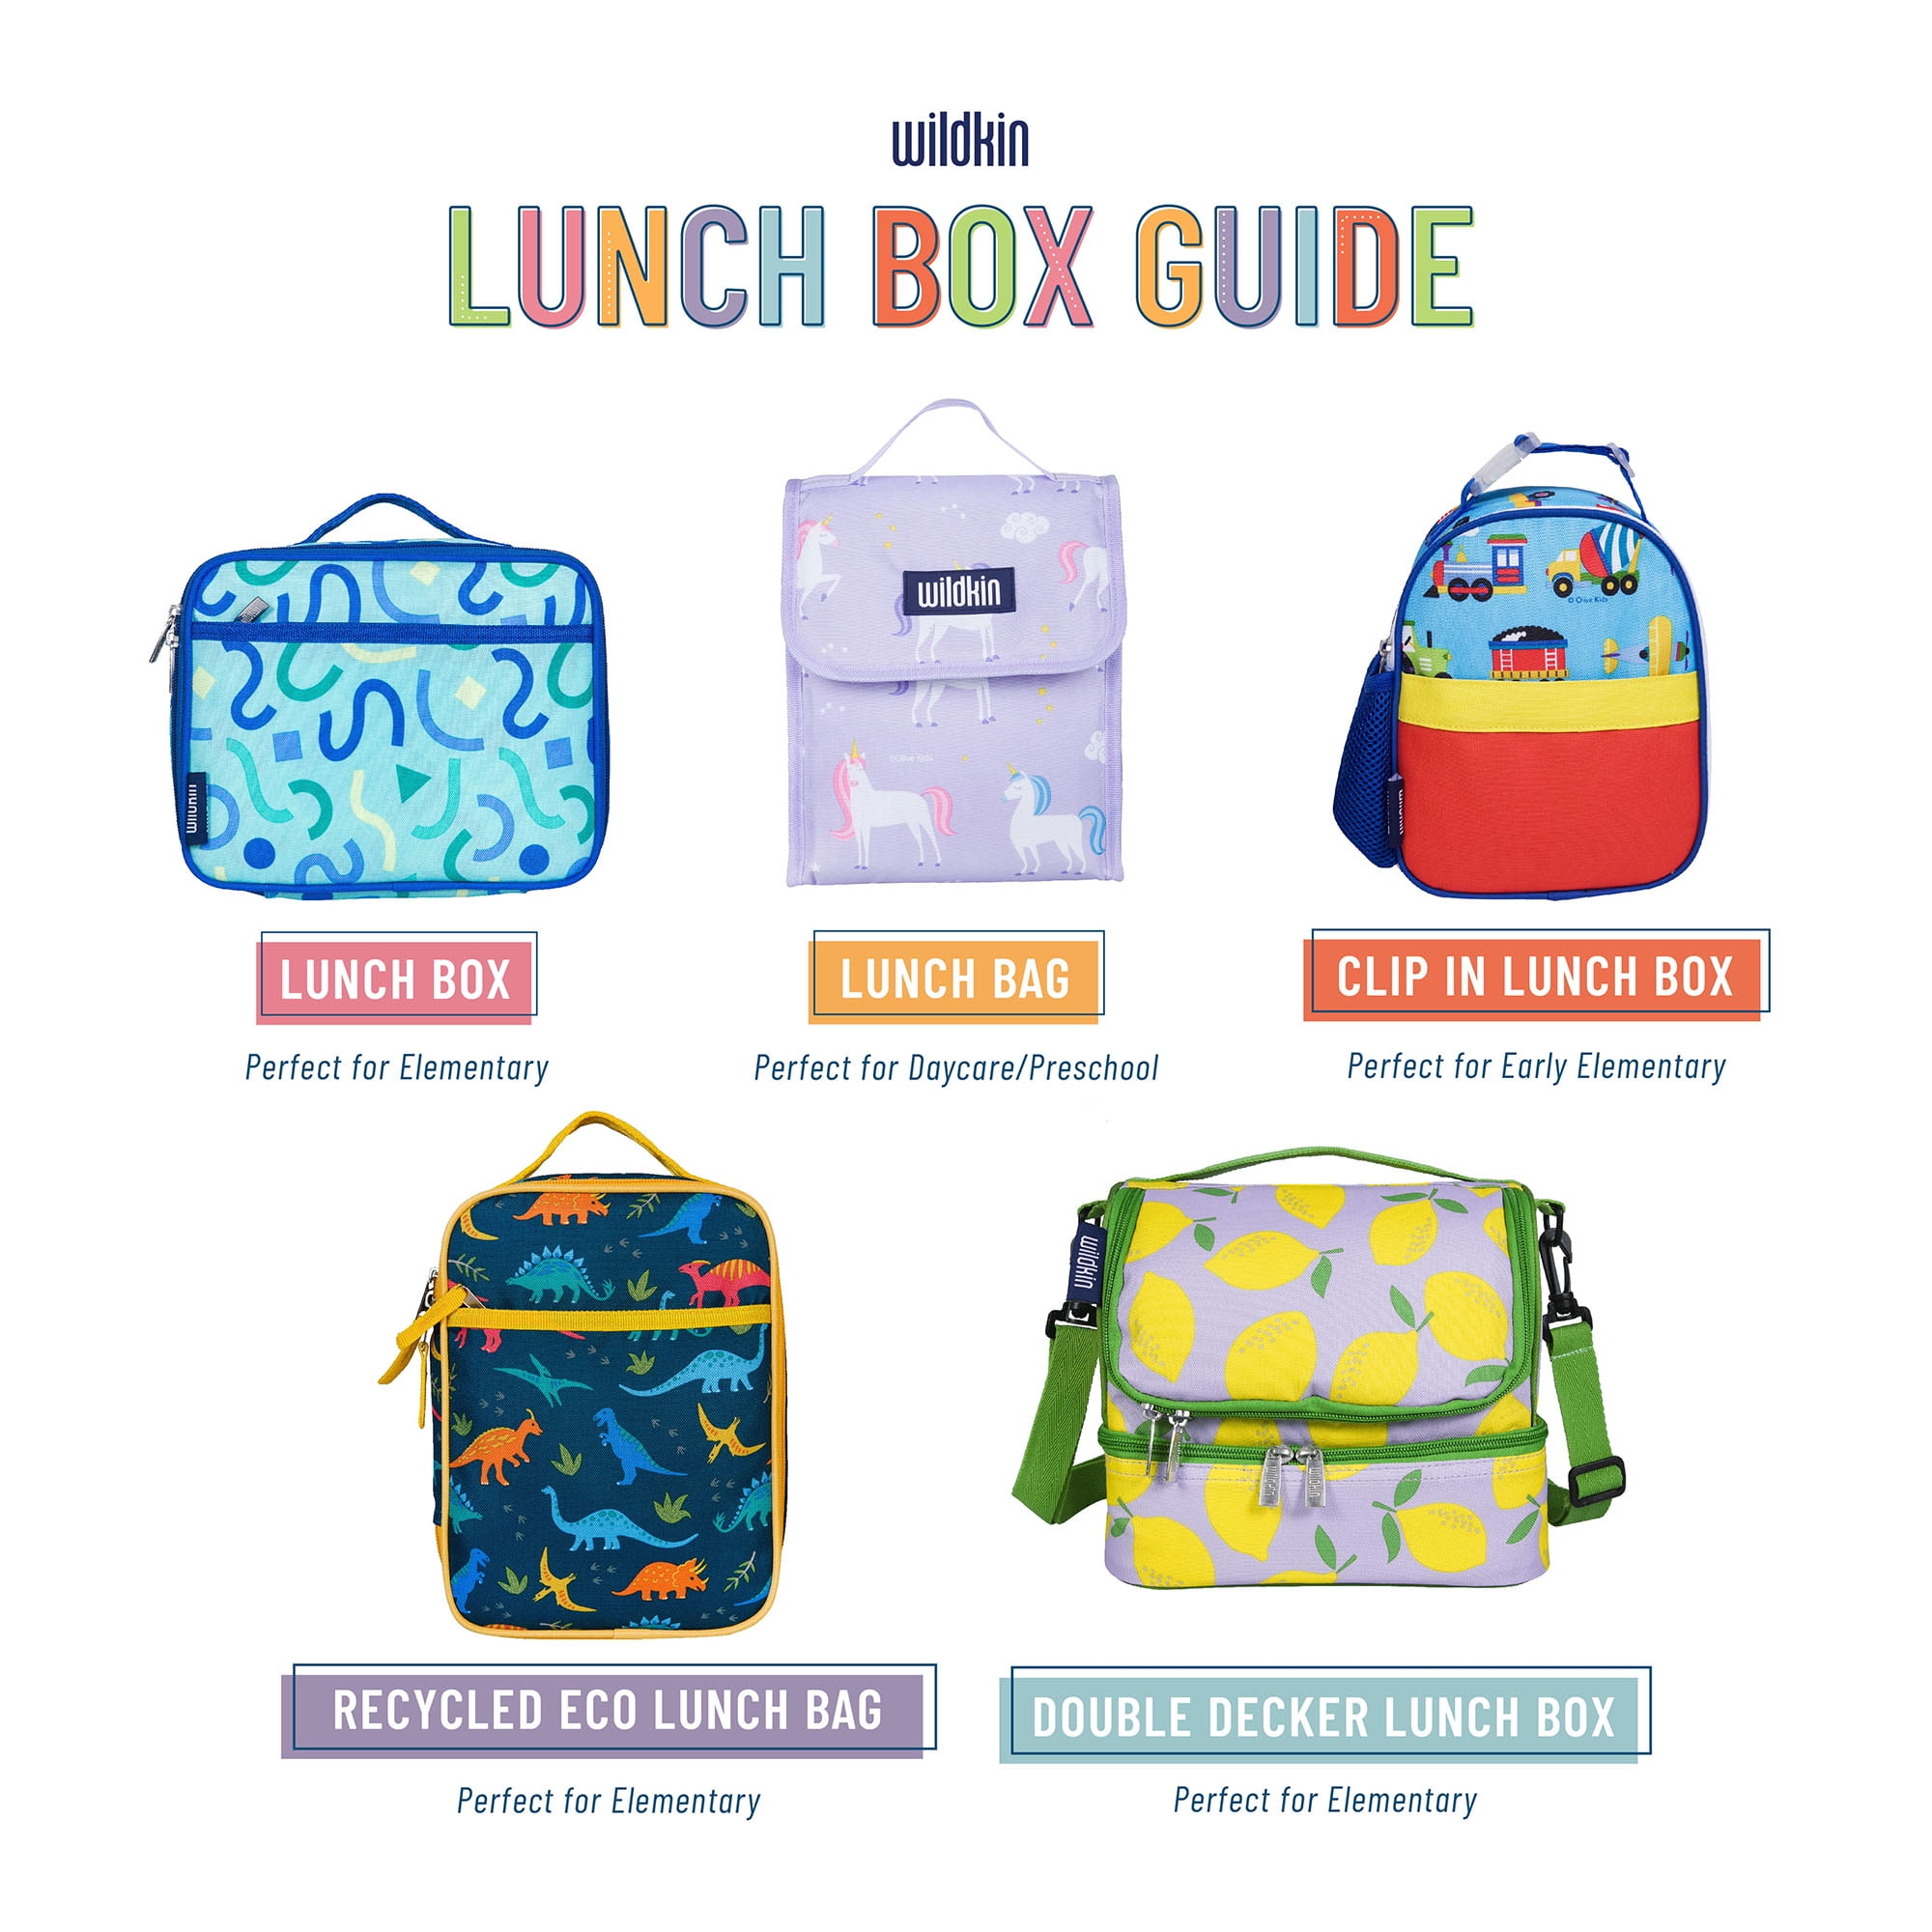 WWE Double Sided Children's Lunch Box Bag — Vanilla Underground